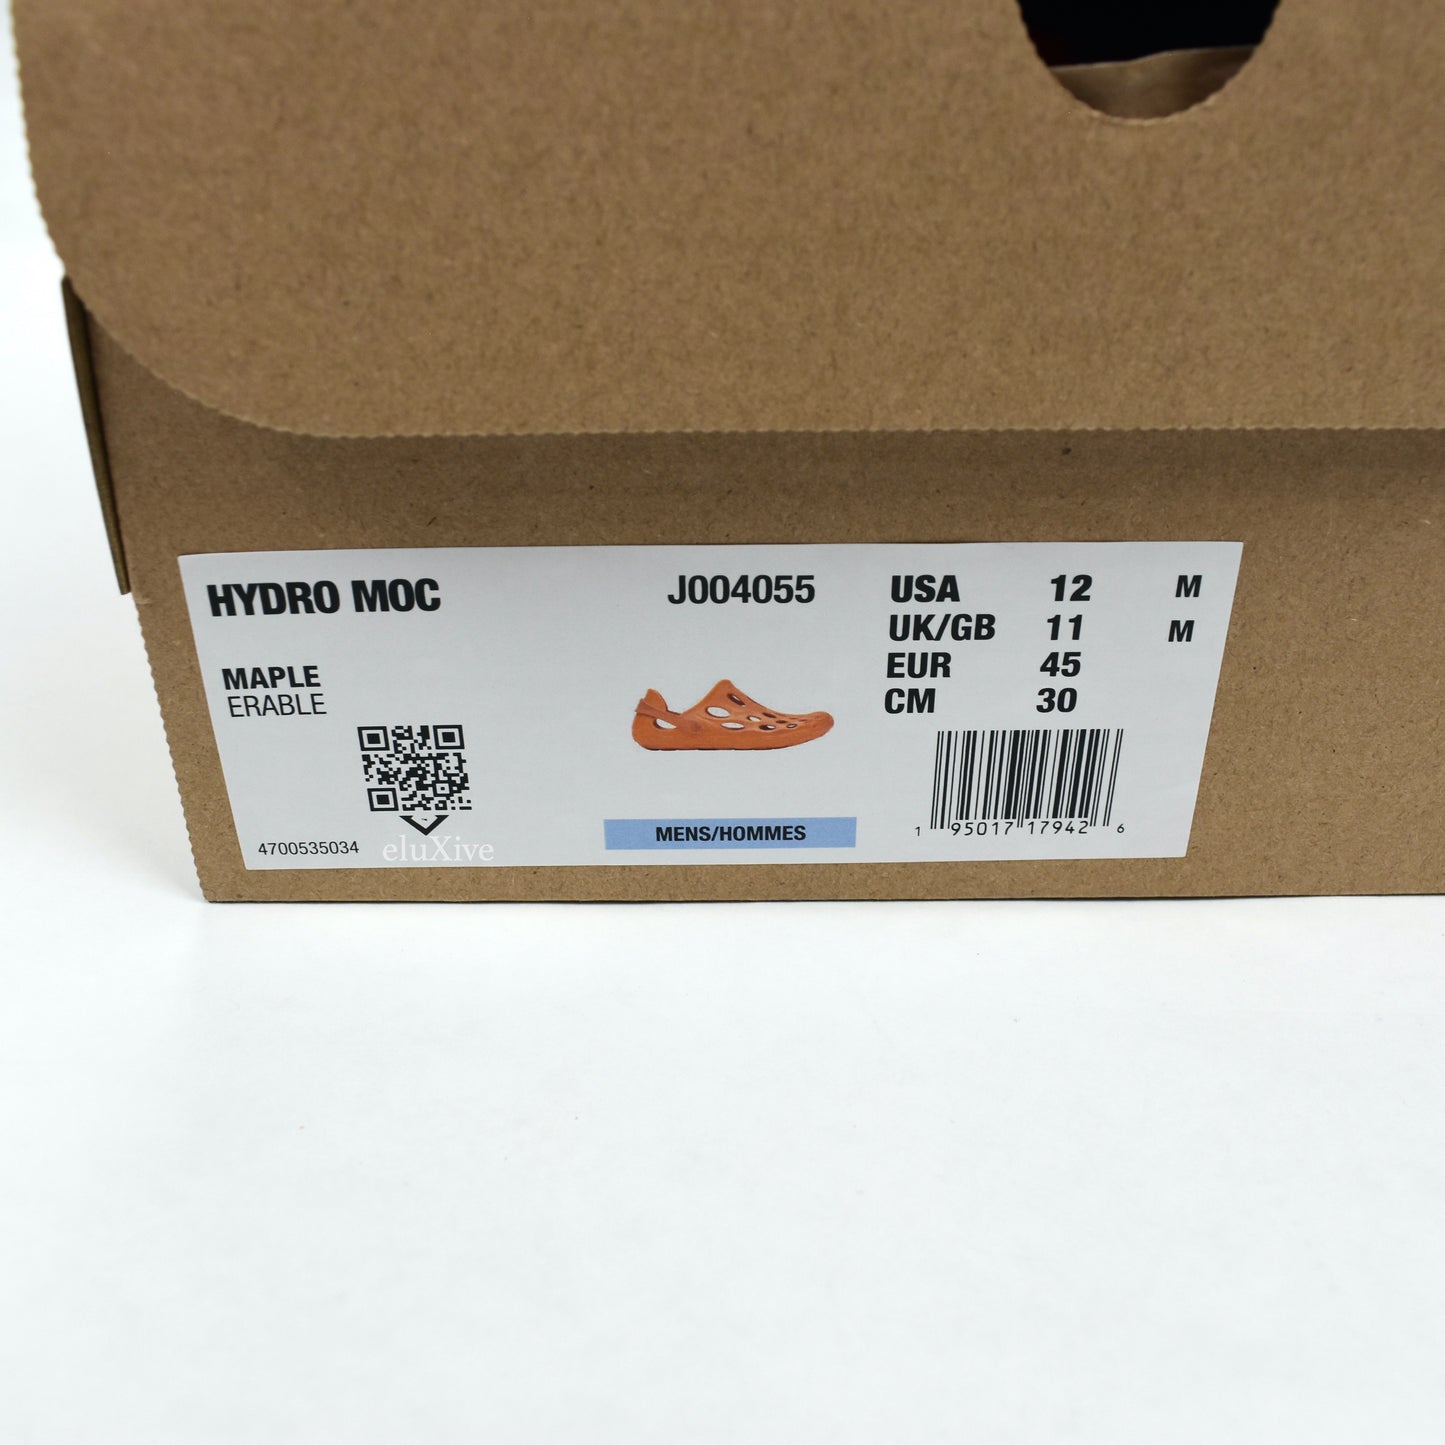 Merrell - Hydro Moc Water Shoes / Clogs (Orange Swirl)